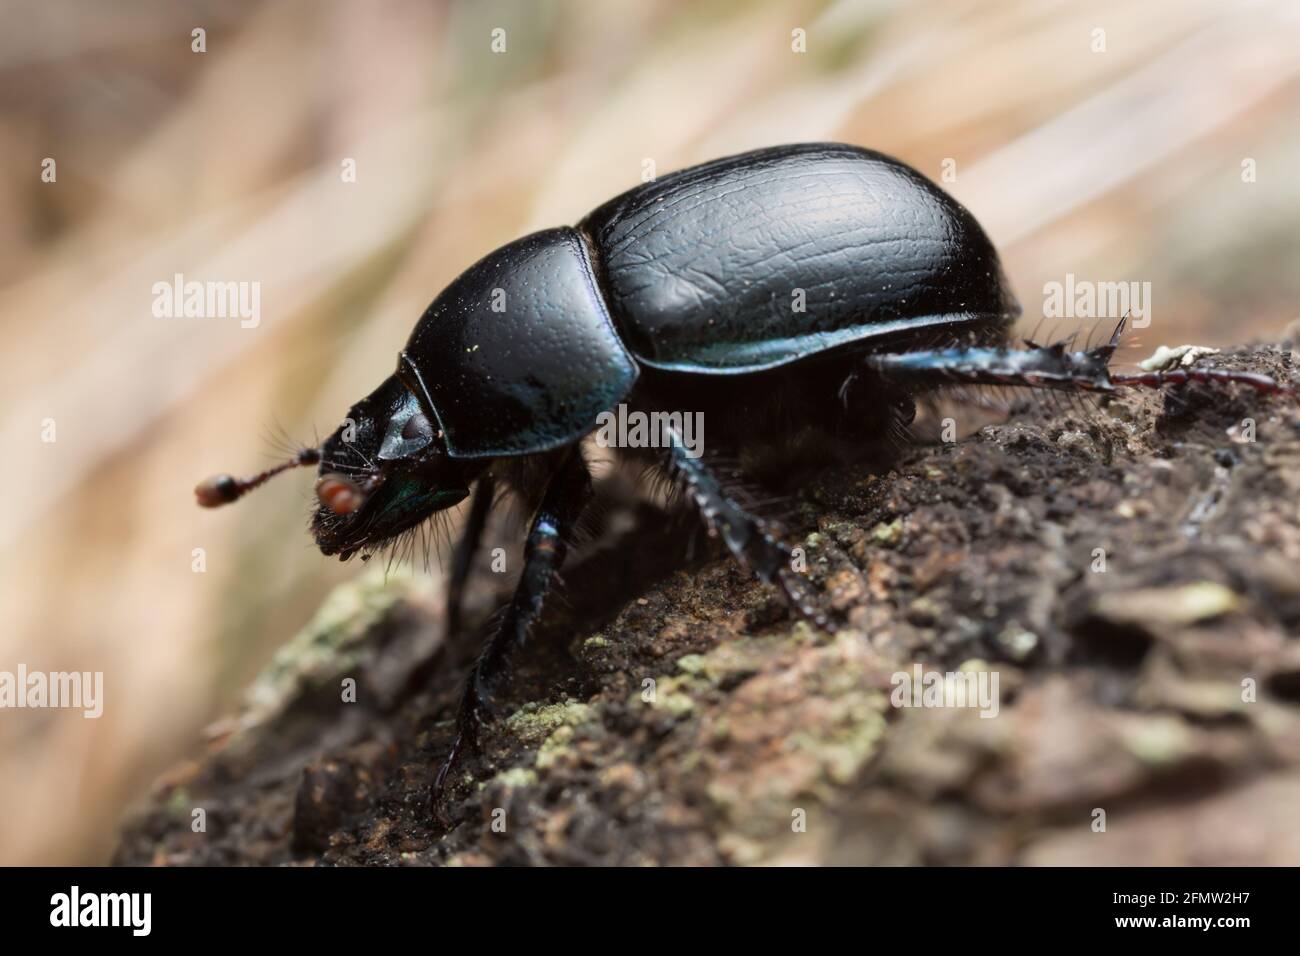 Dor beetle, Anoplotrupes stercorosus, macro photo Stock Photo